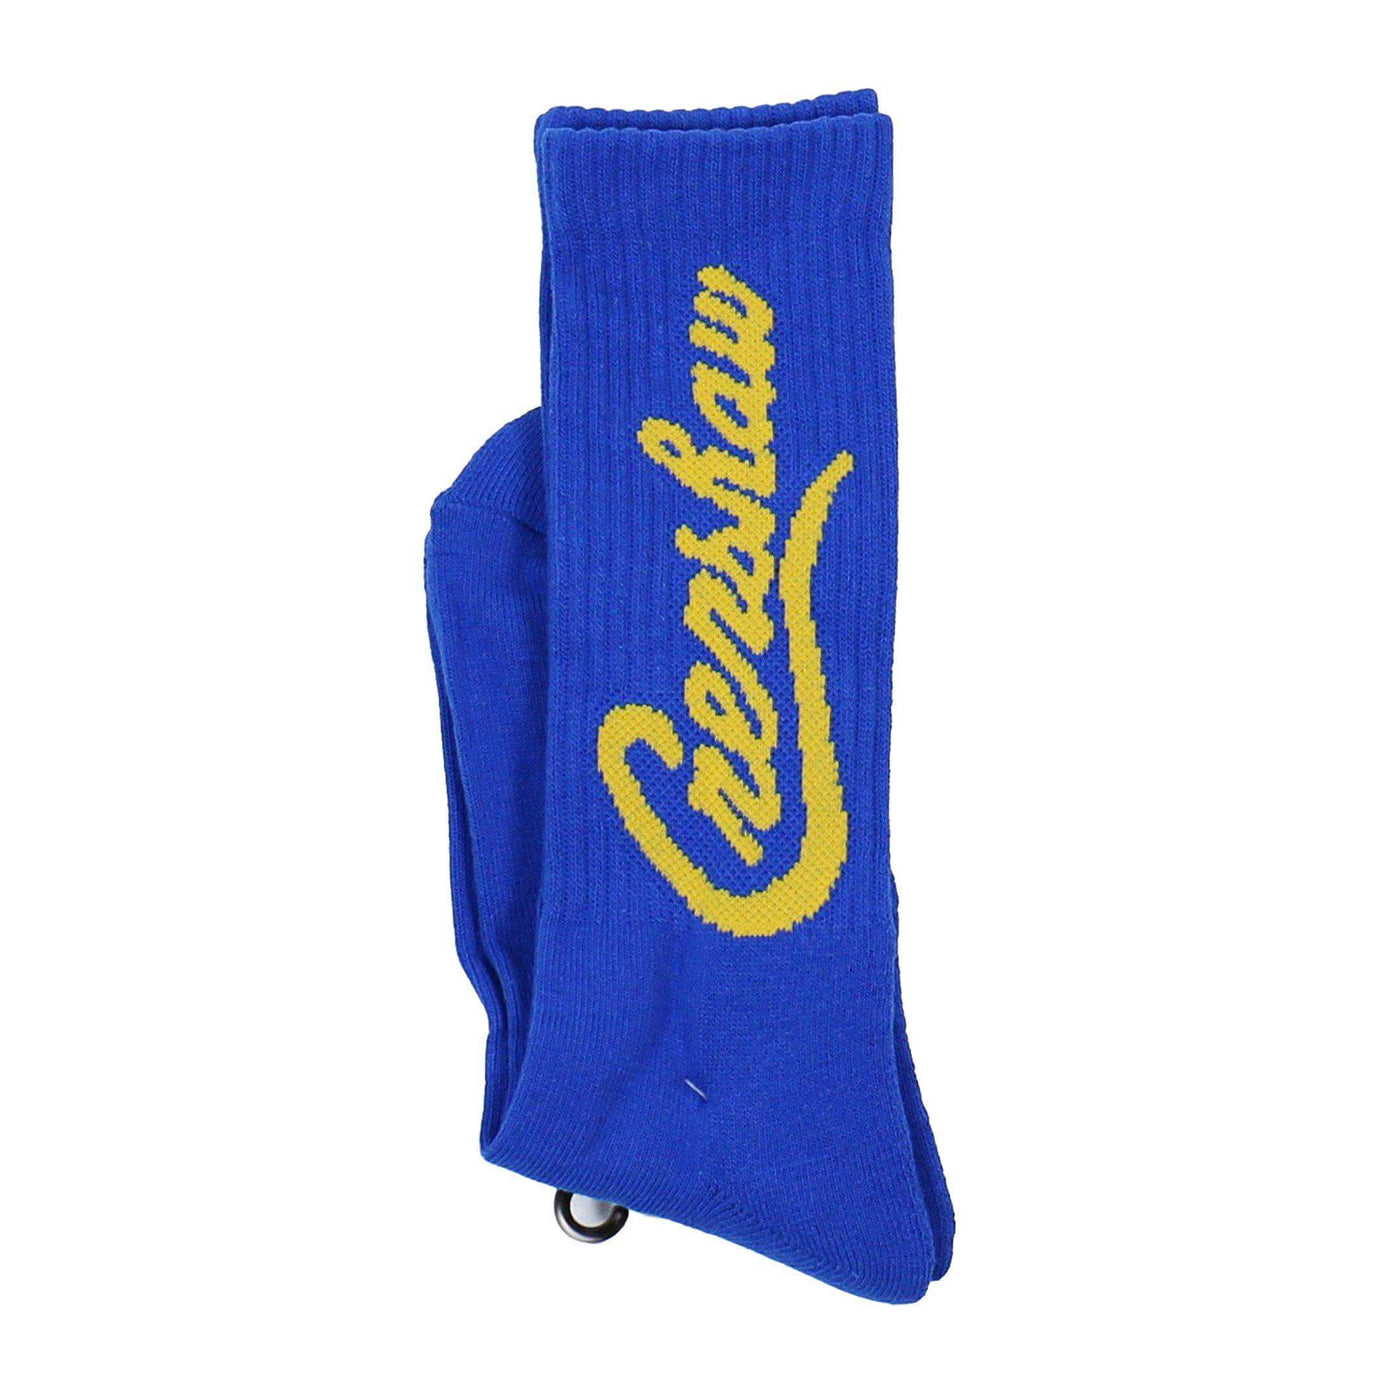 Crenshaw Socks - Royal/Gold-The Marathon Clothing